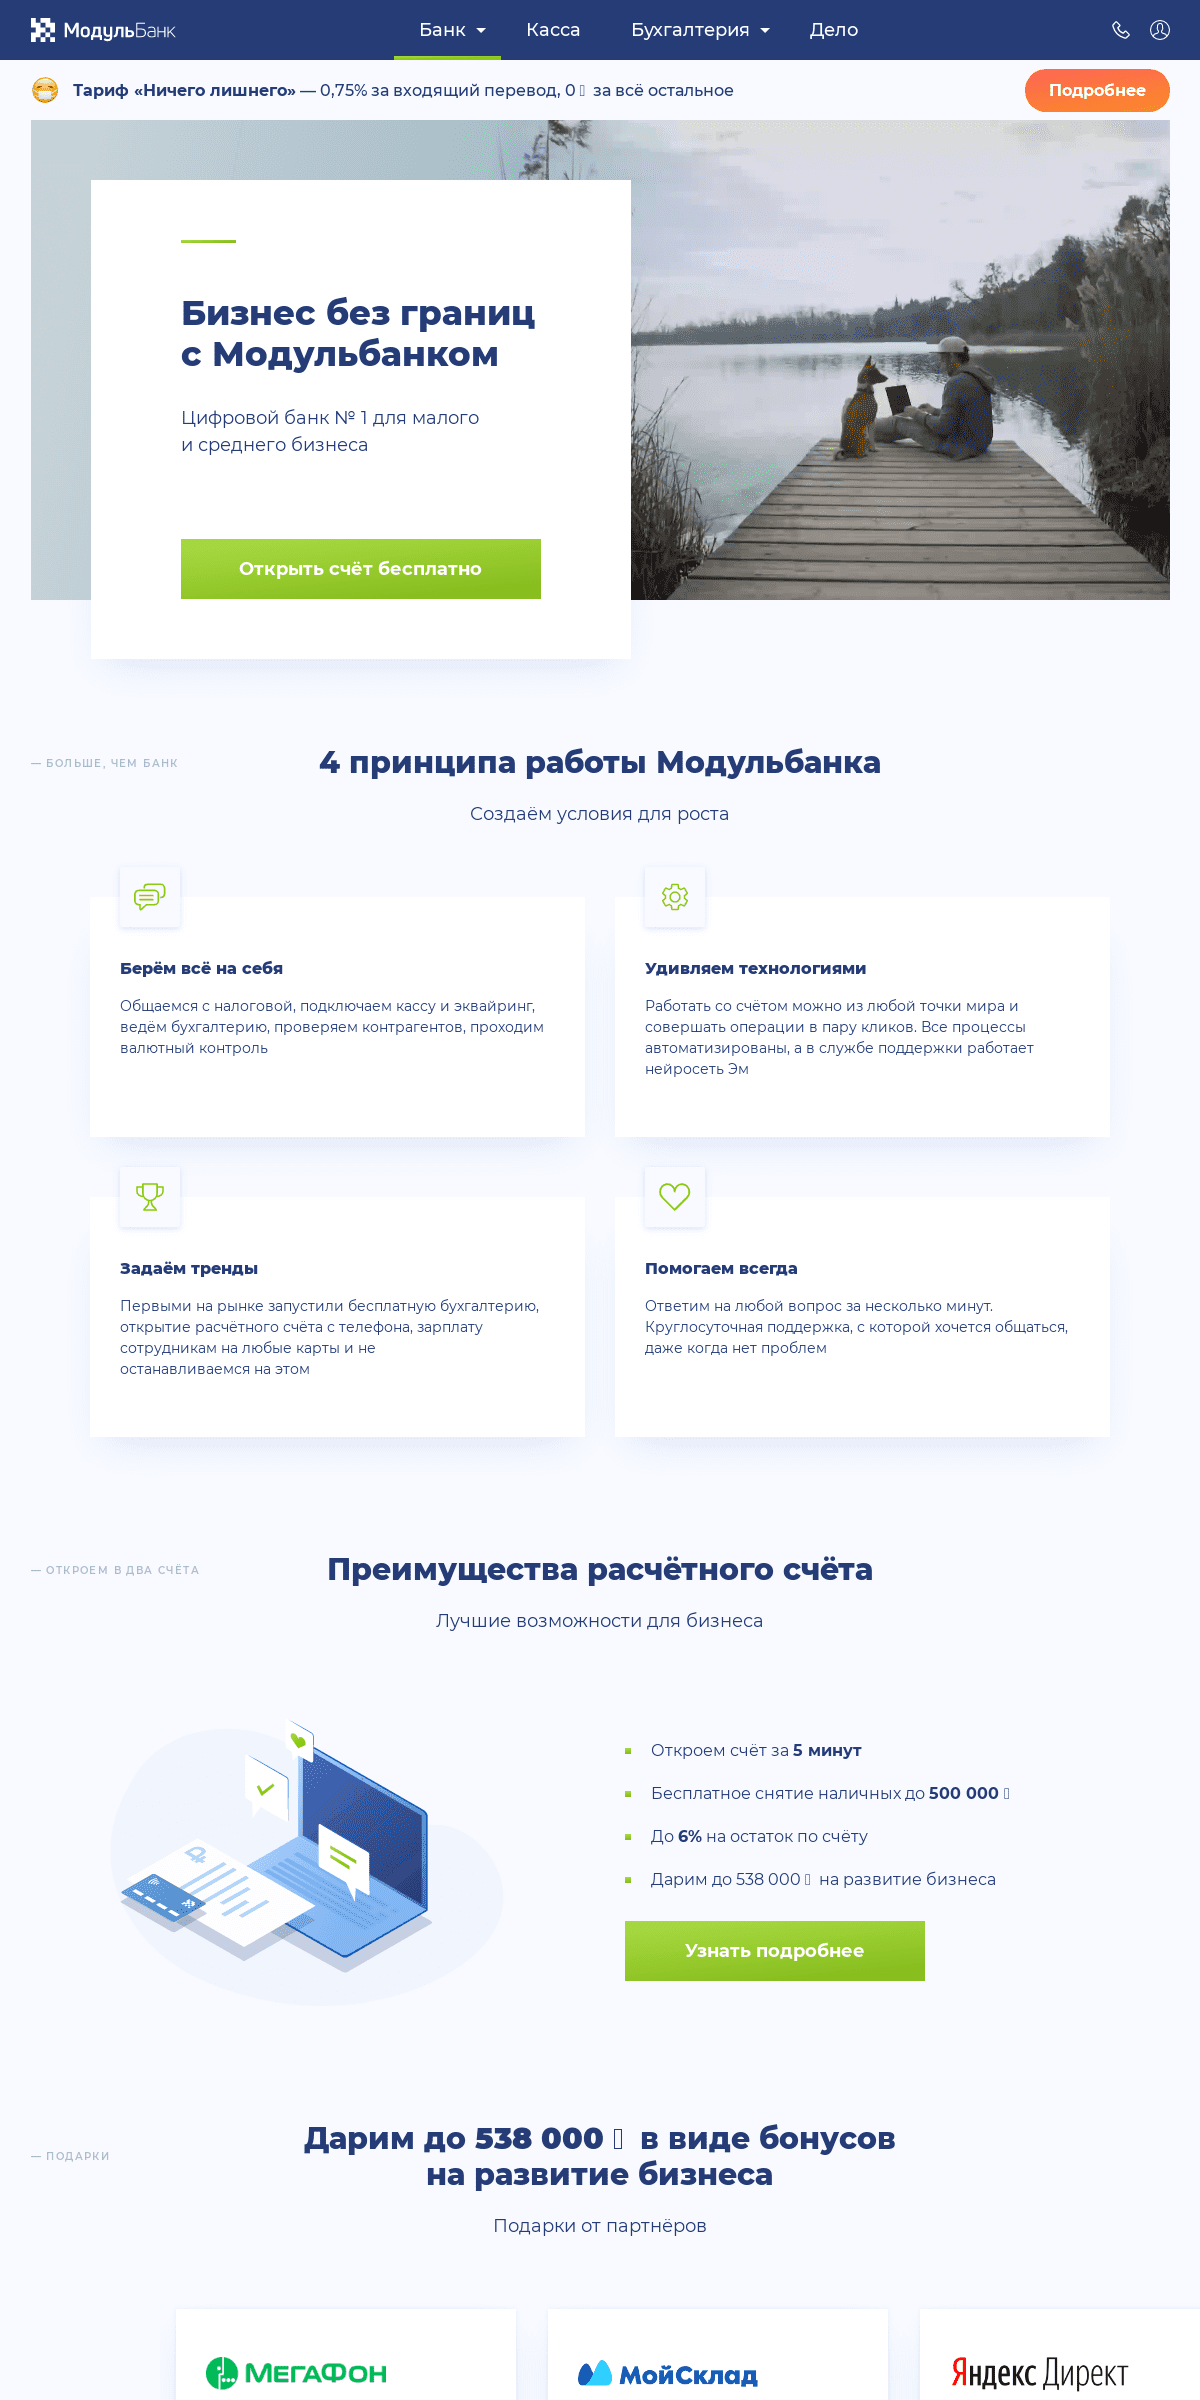 A complete backup of modulbank.ru